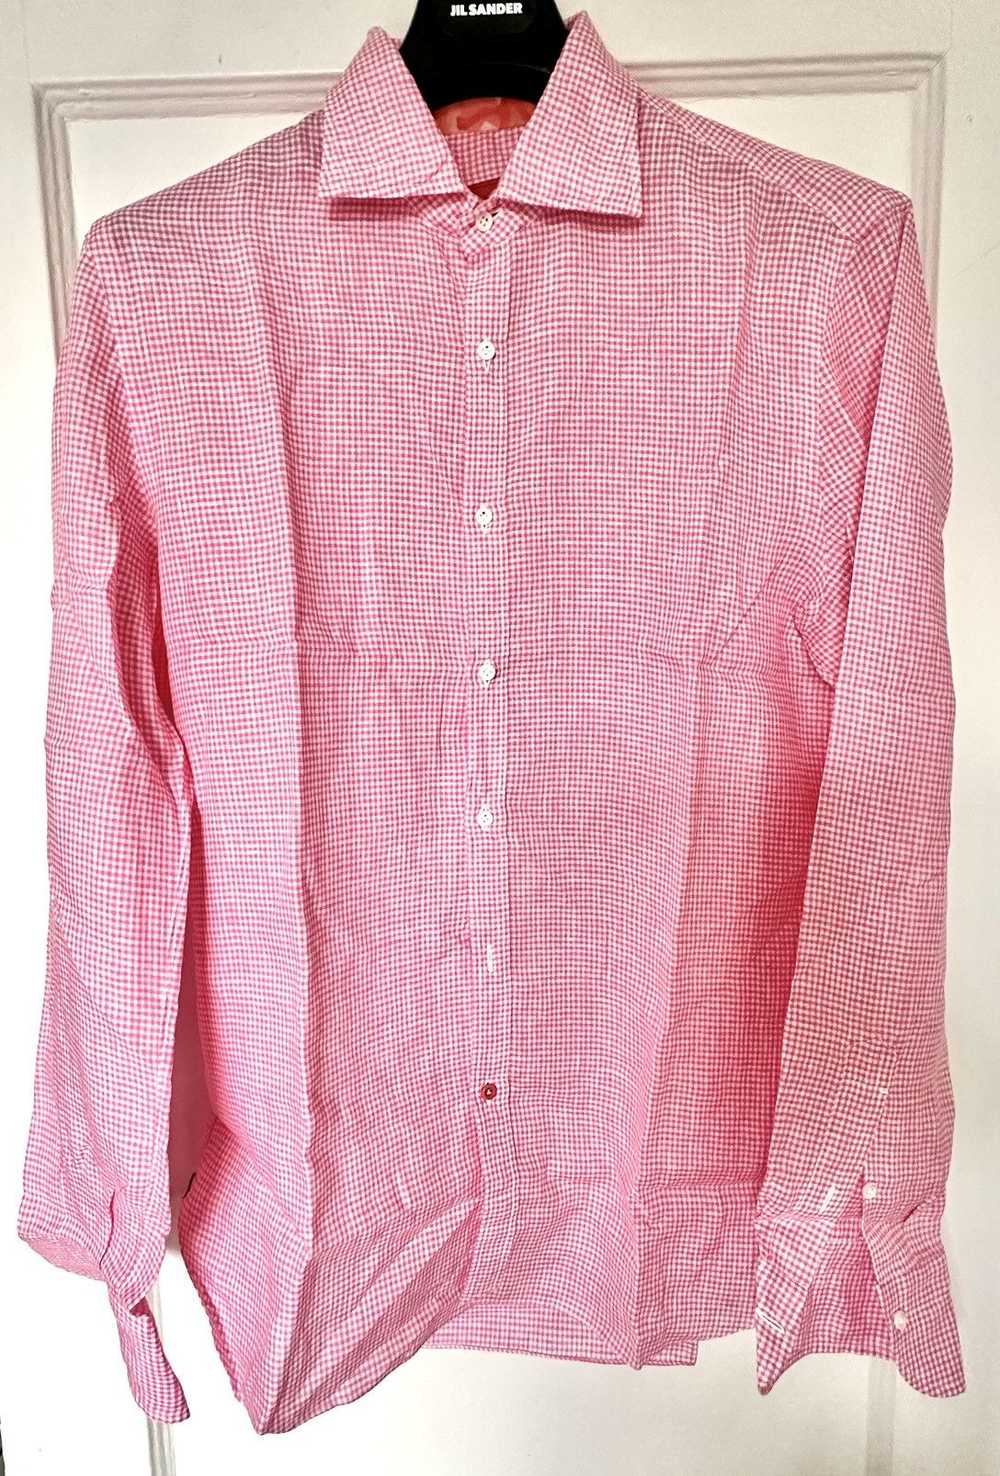 Isaia Isaia LS linen gingham shirt - image 1